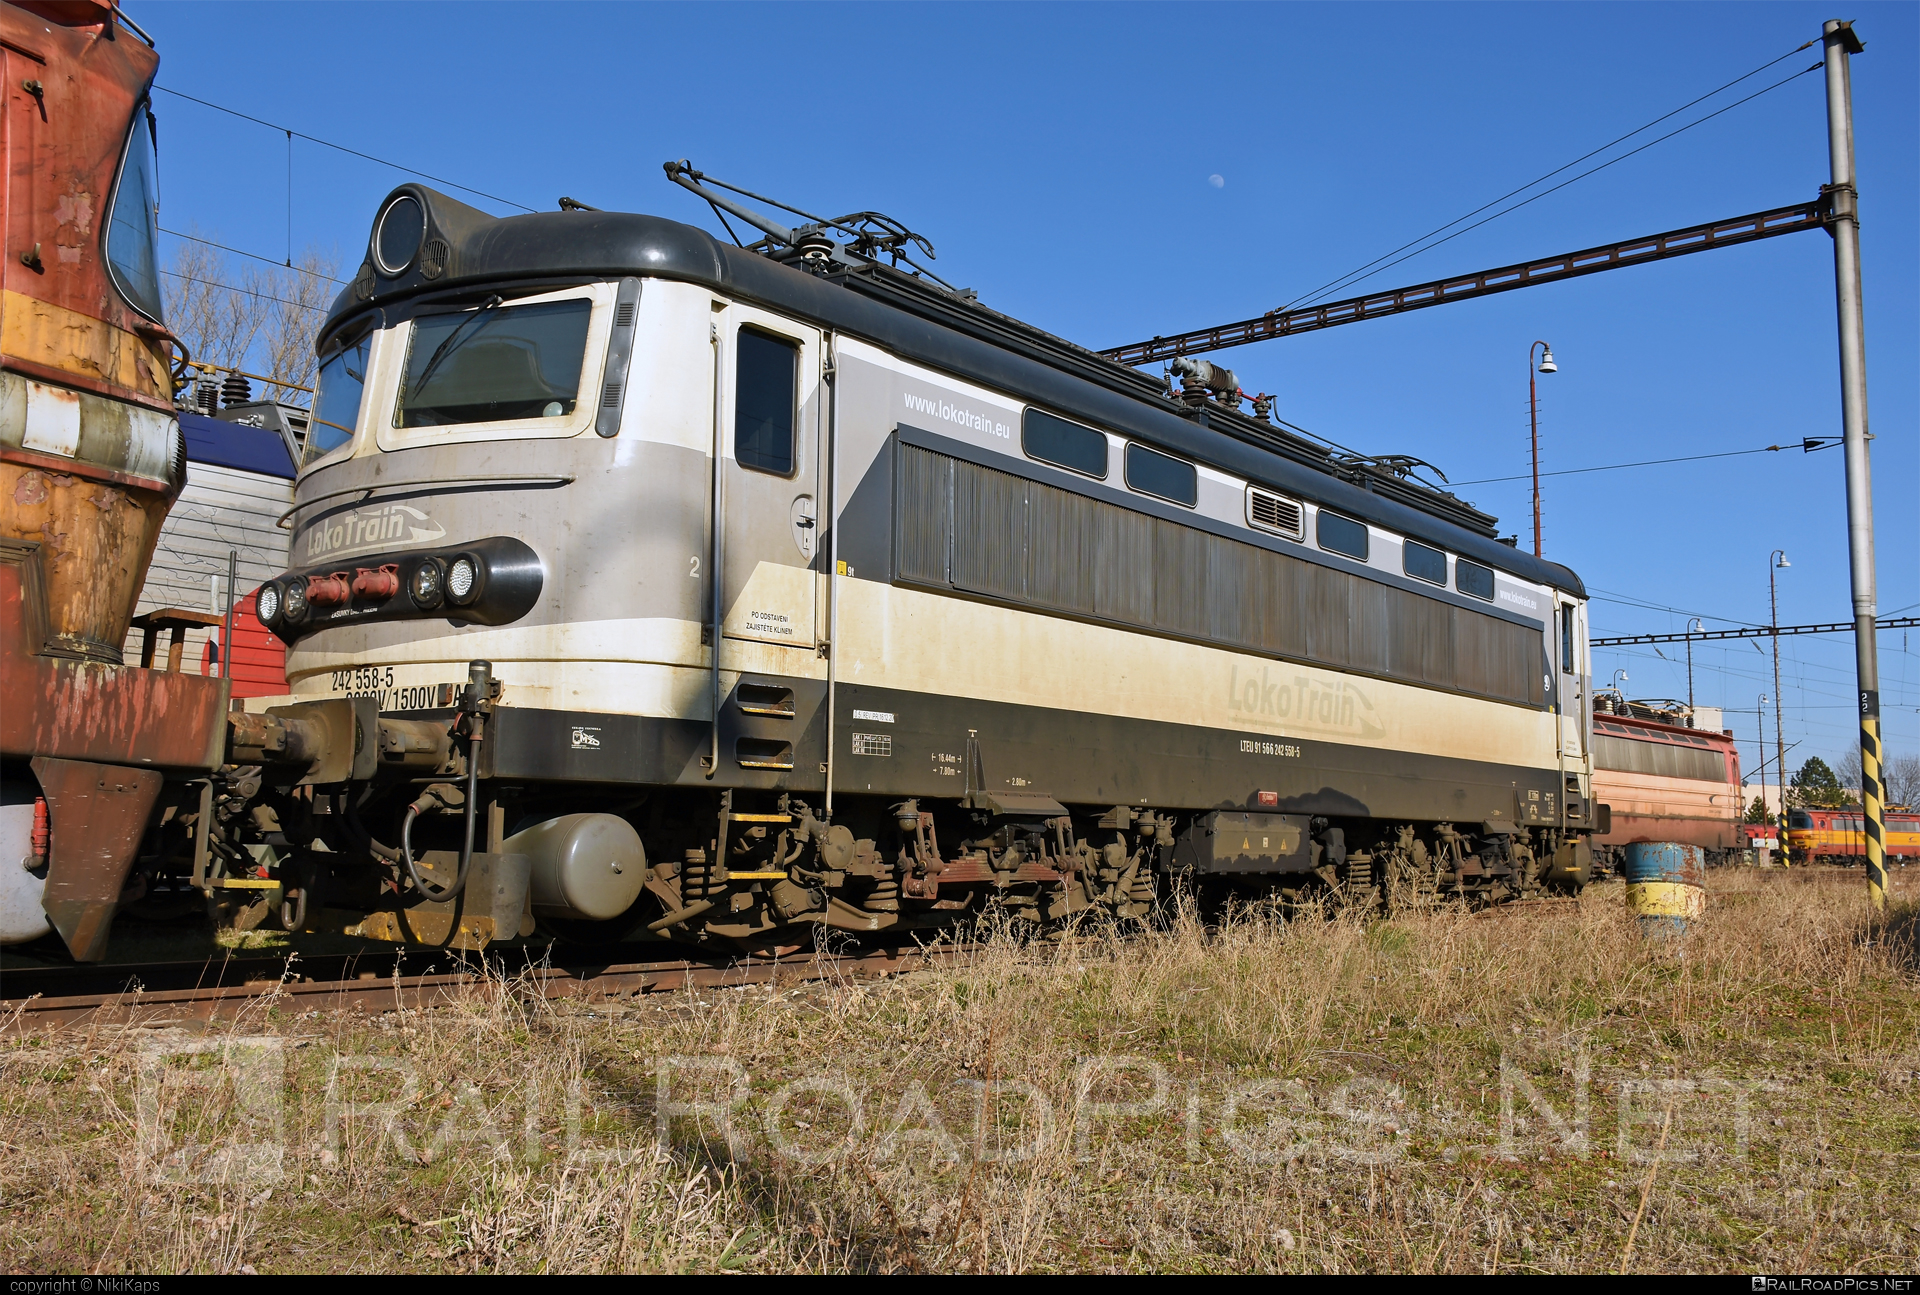 Škoda 73E - 242 558-5 operated by Loko Train s.r.o. #locomotive242 #lokotrain #lokotrainsro #plechac #skoda #skoda73e